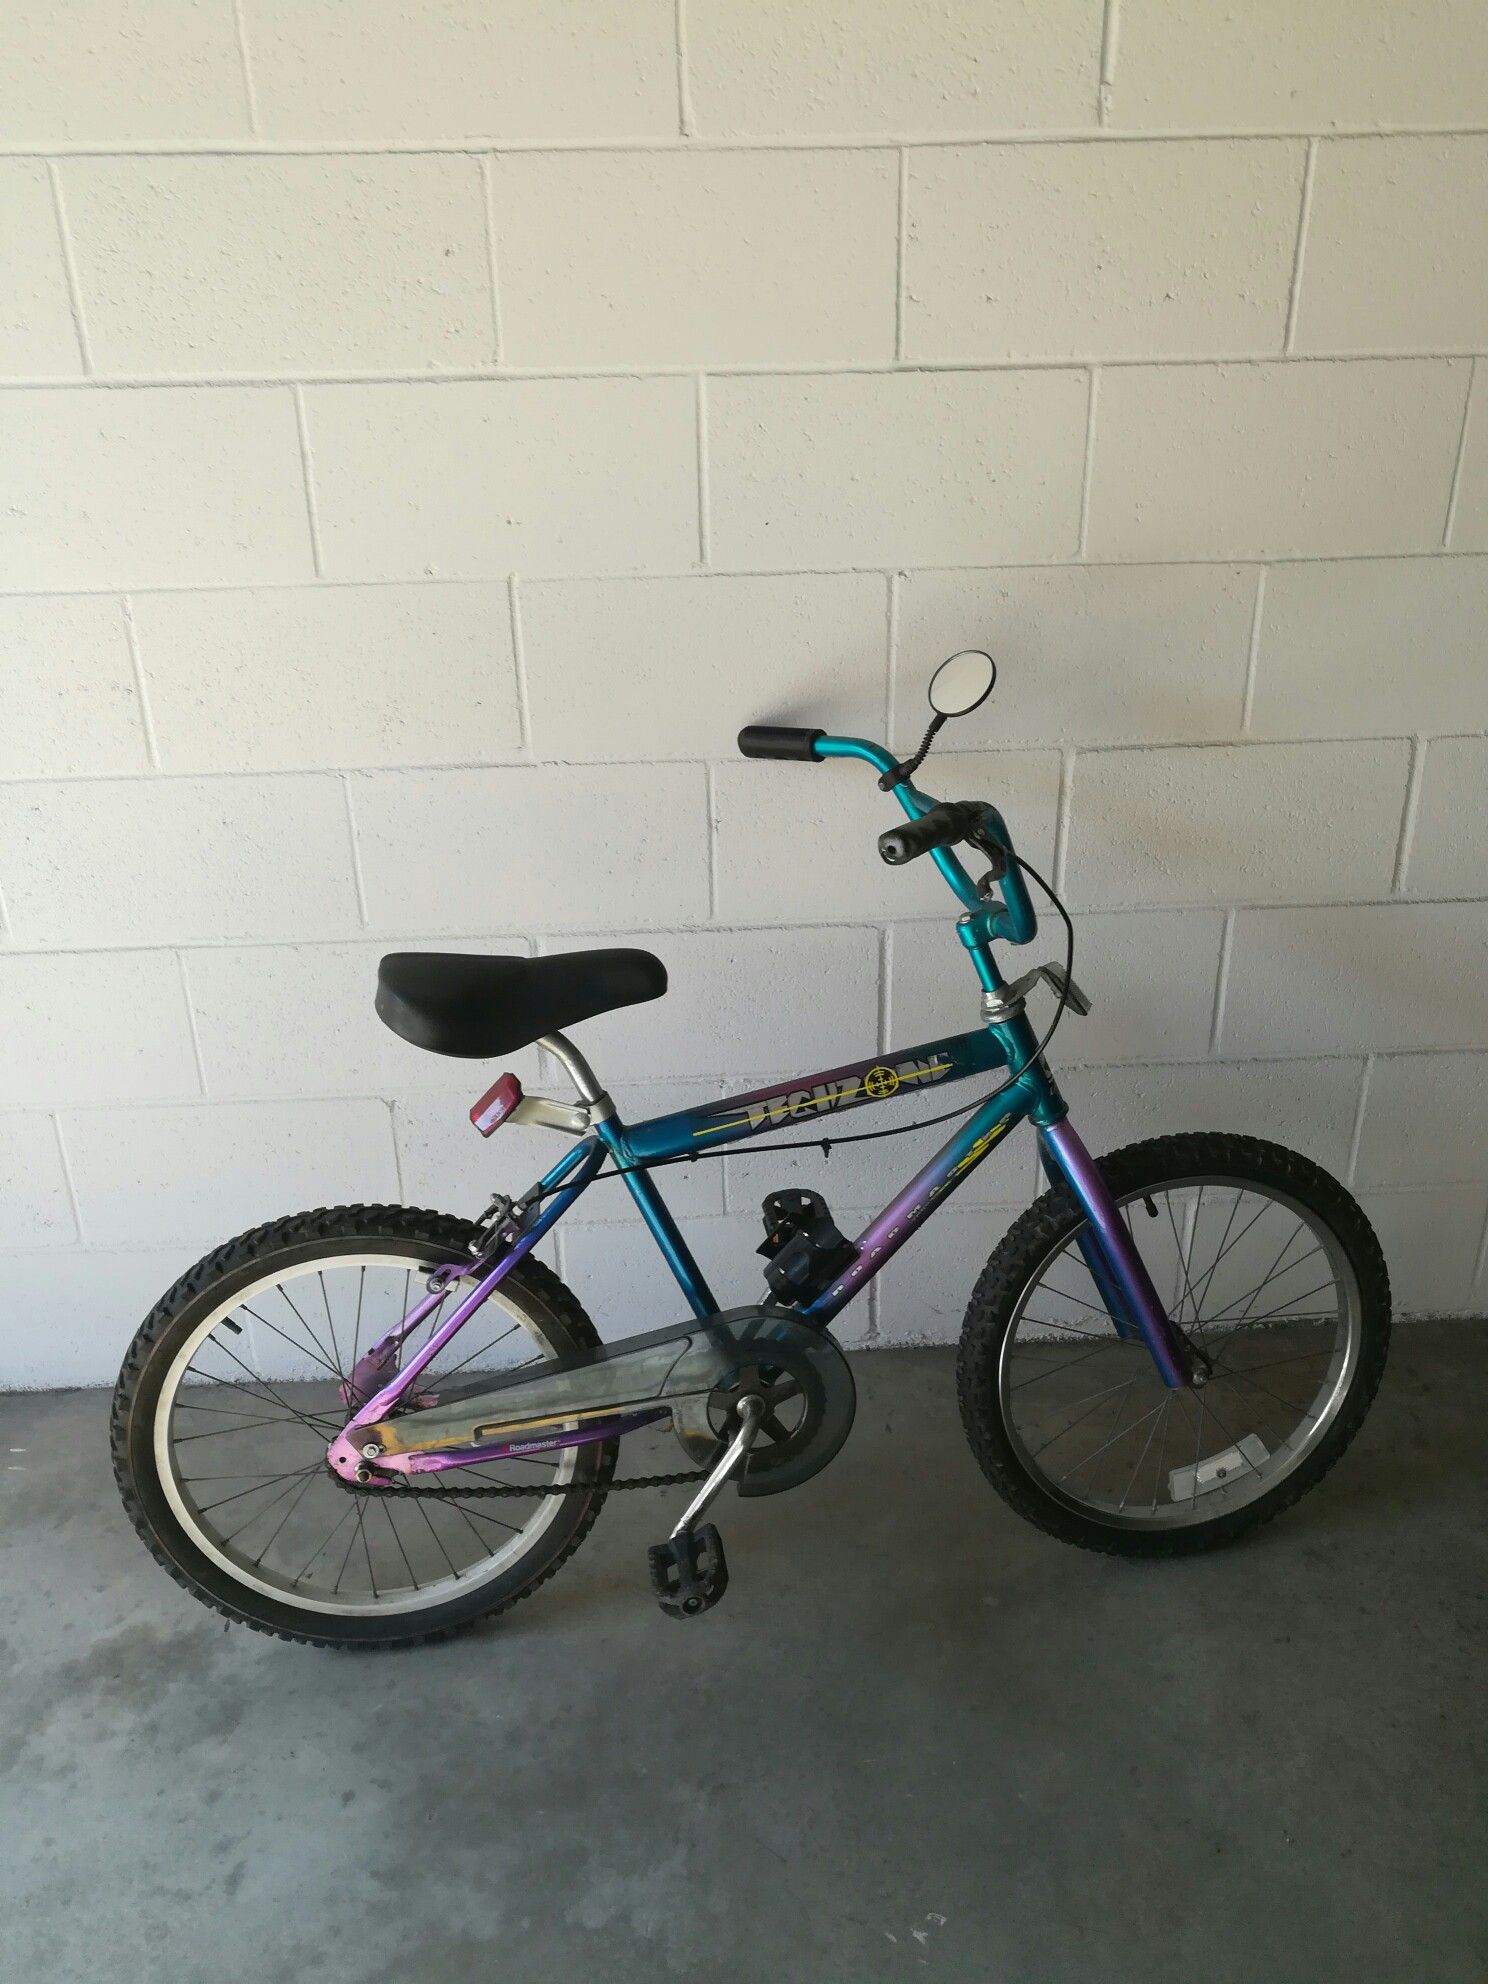 Kid's bike 20" only $15